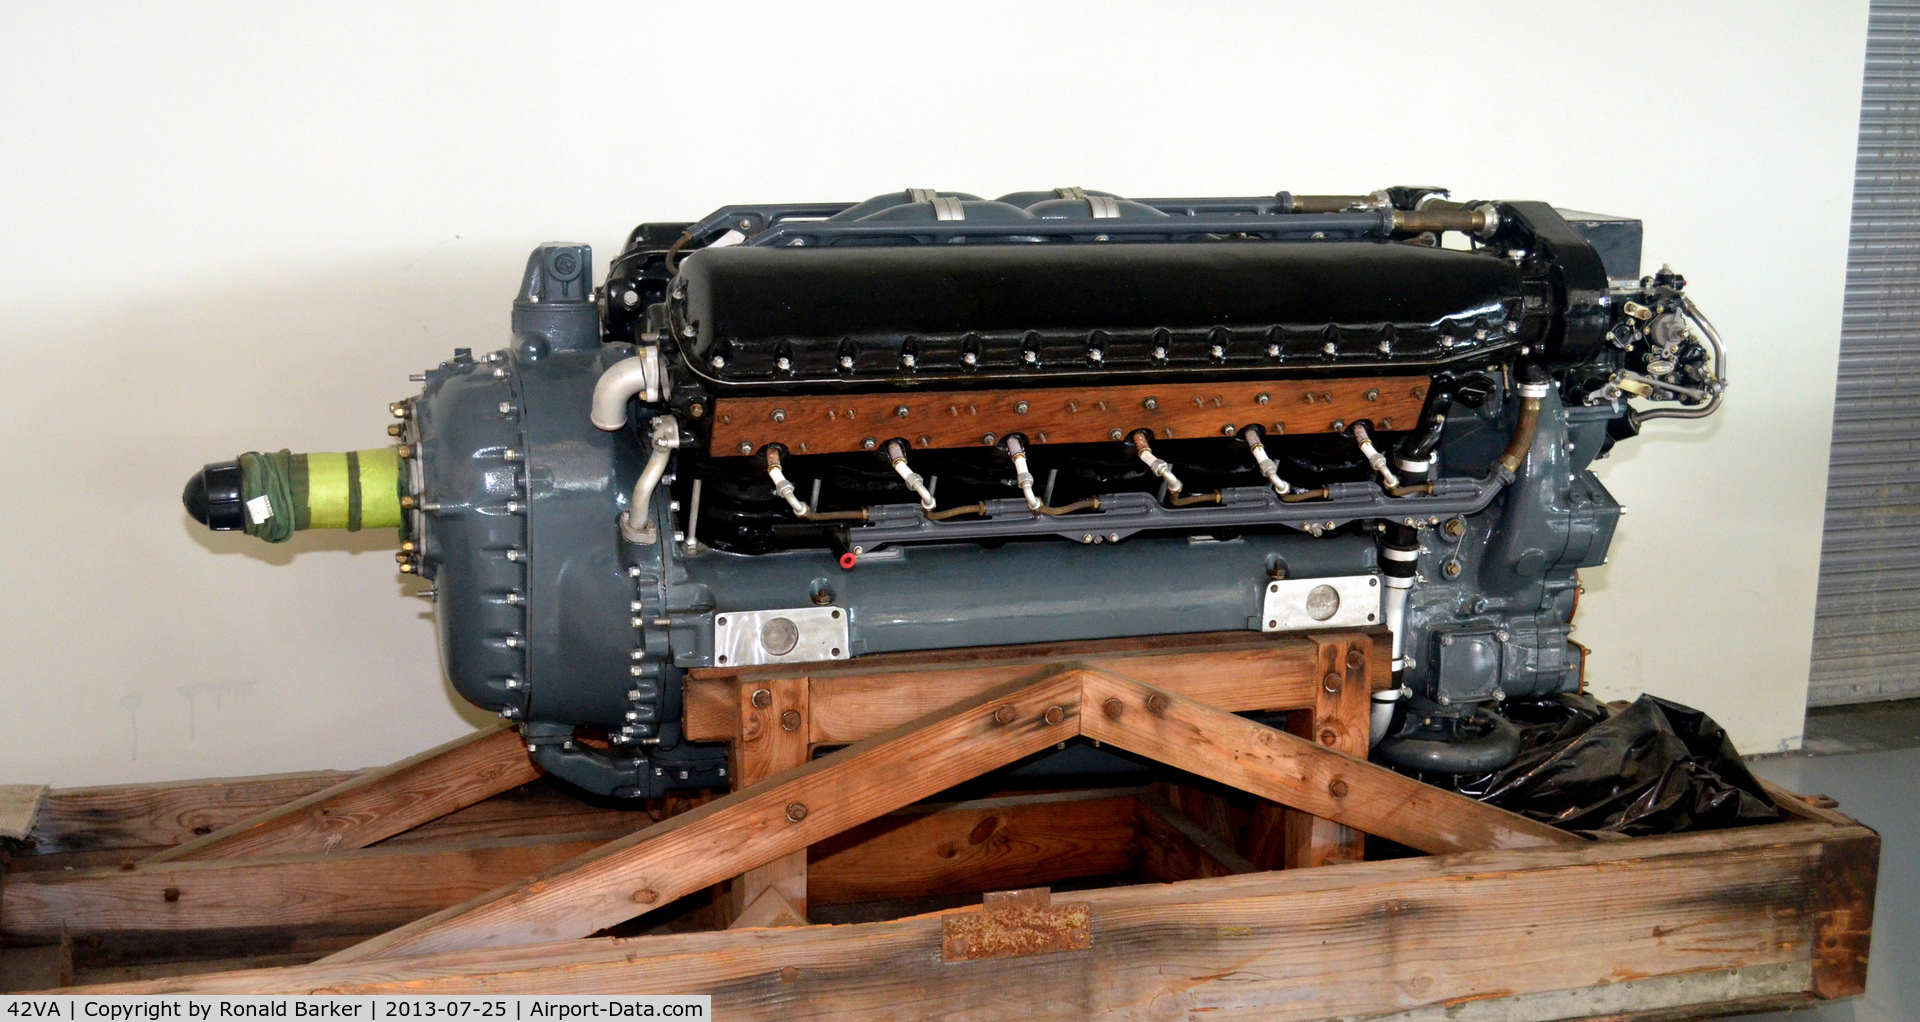 Virginia Beach Airport (42VA) - Aircraft Engine, Military Aviation Museum, Pungo, VA